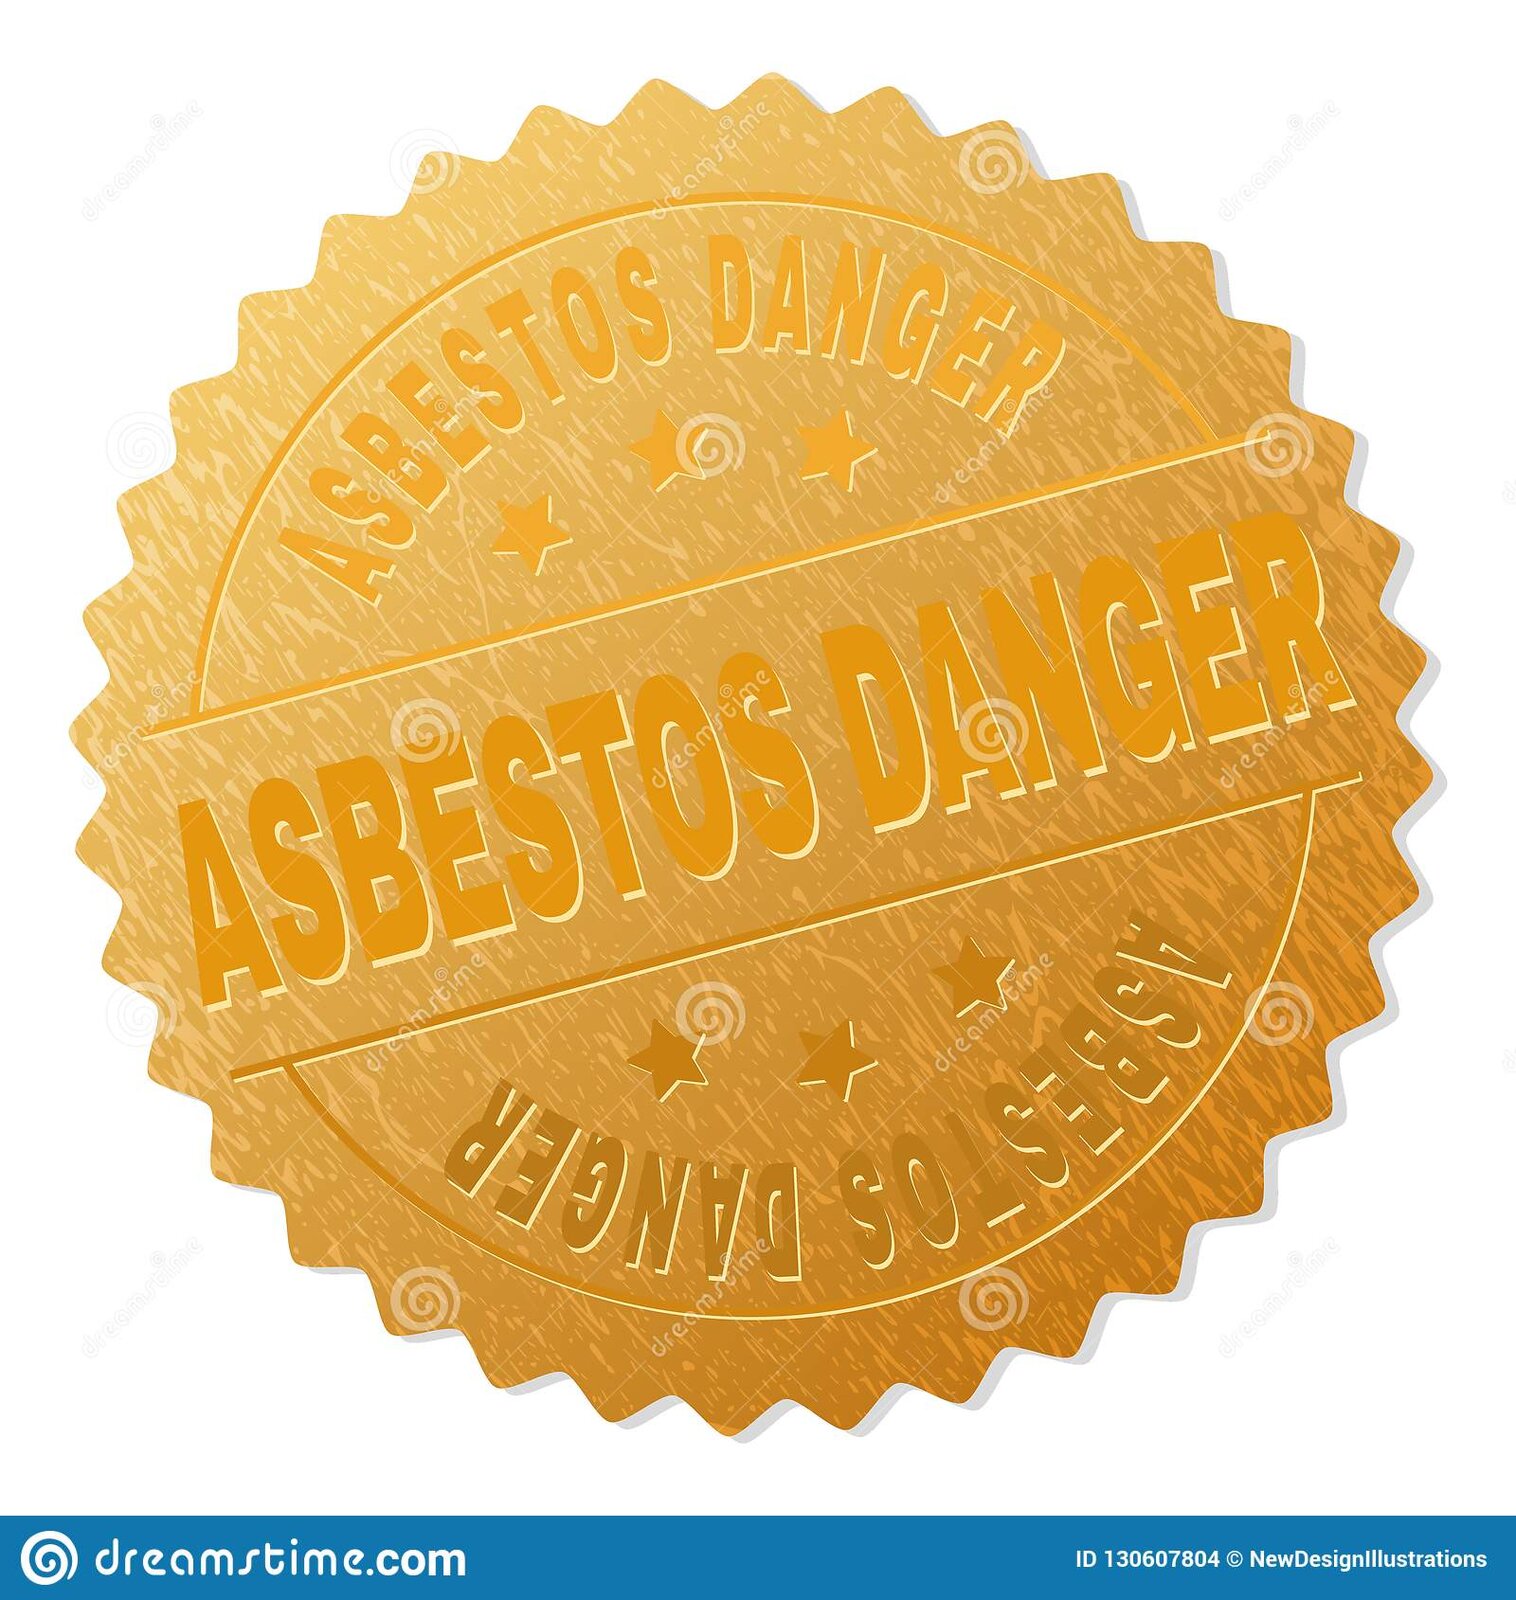 gold-asbestos-danger-medallion-stamp-asbestos-danger-gold-stamp-medallion.jpg